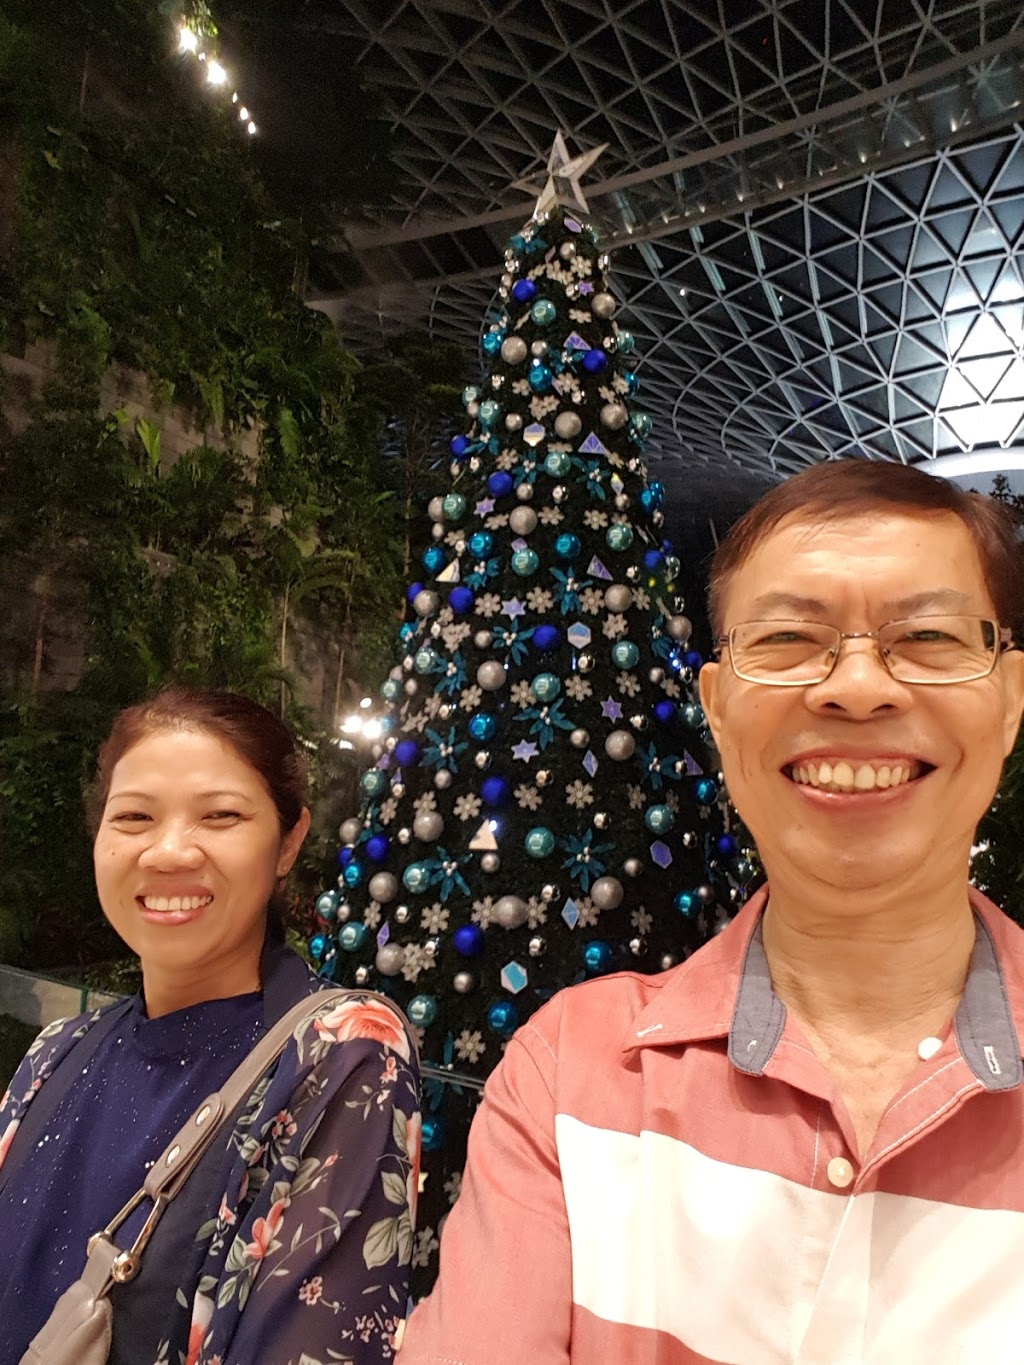 T3 Changi Singapore airport | Jewells NSW 2280, Australia